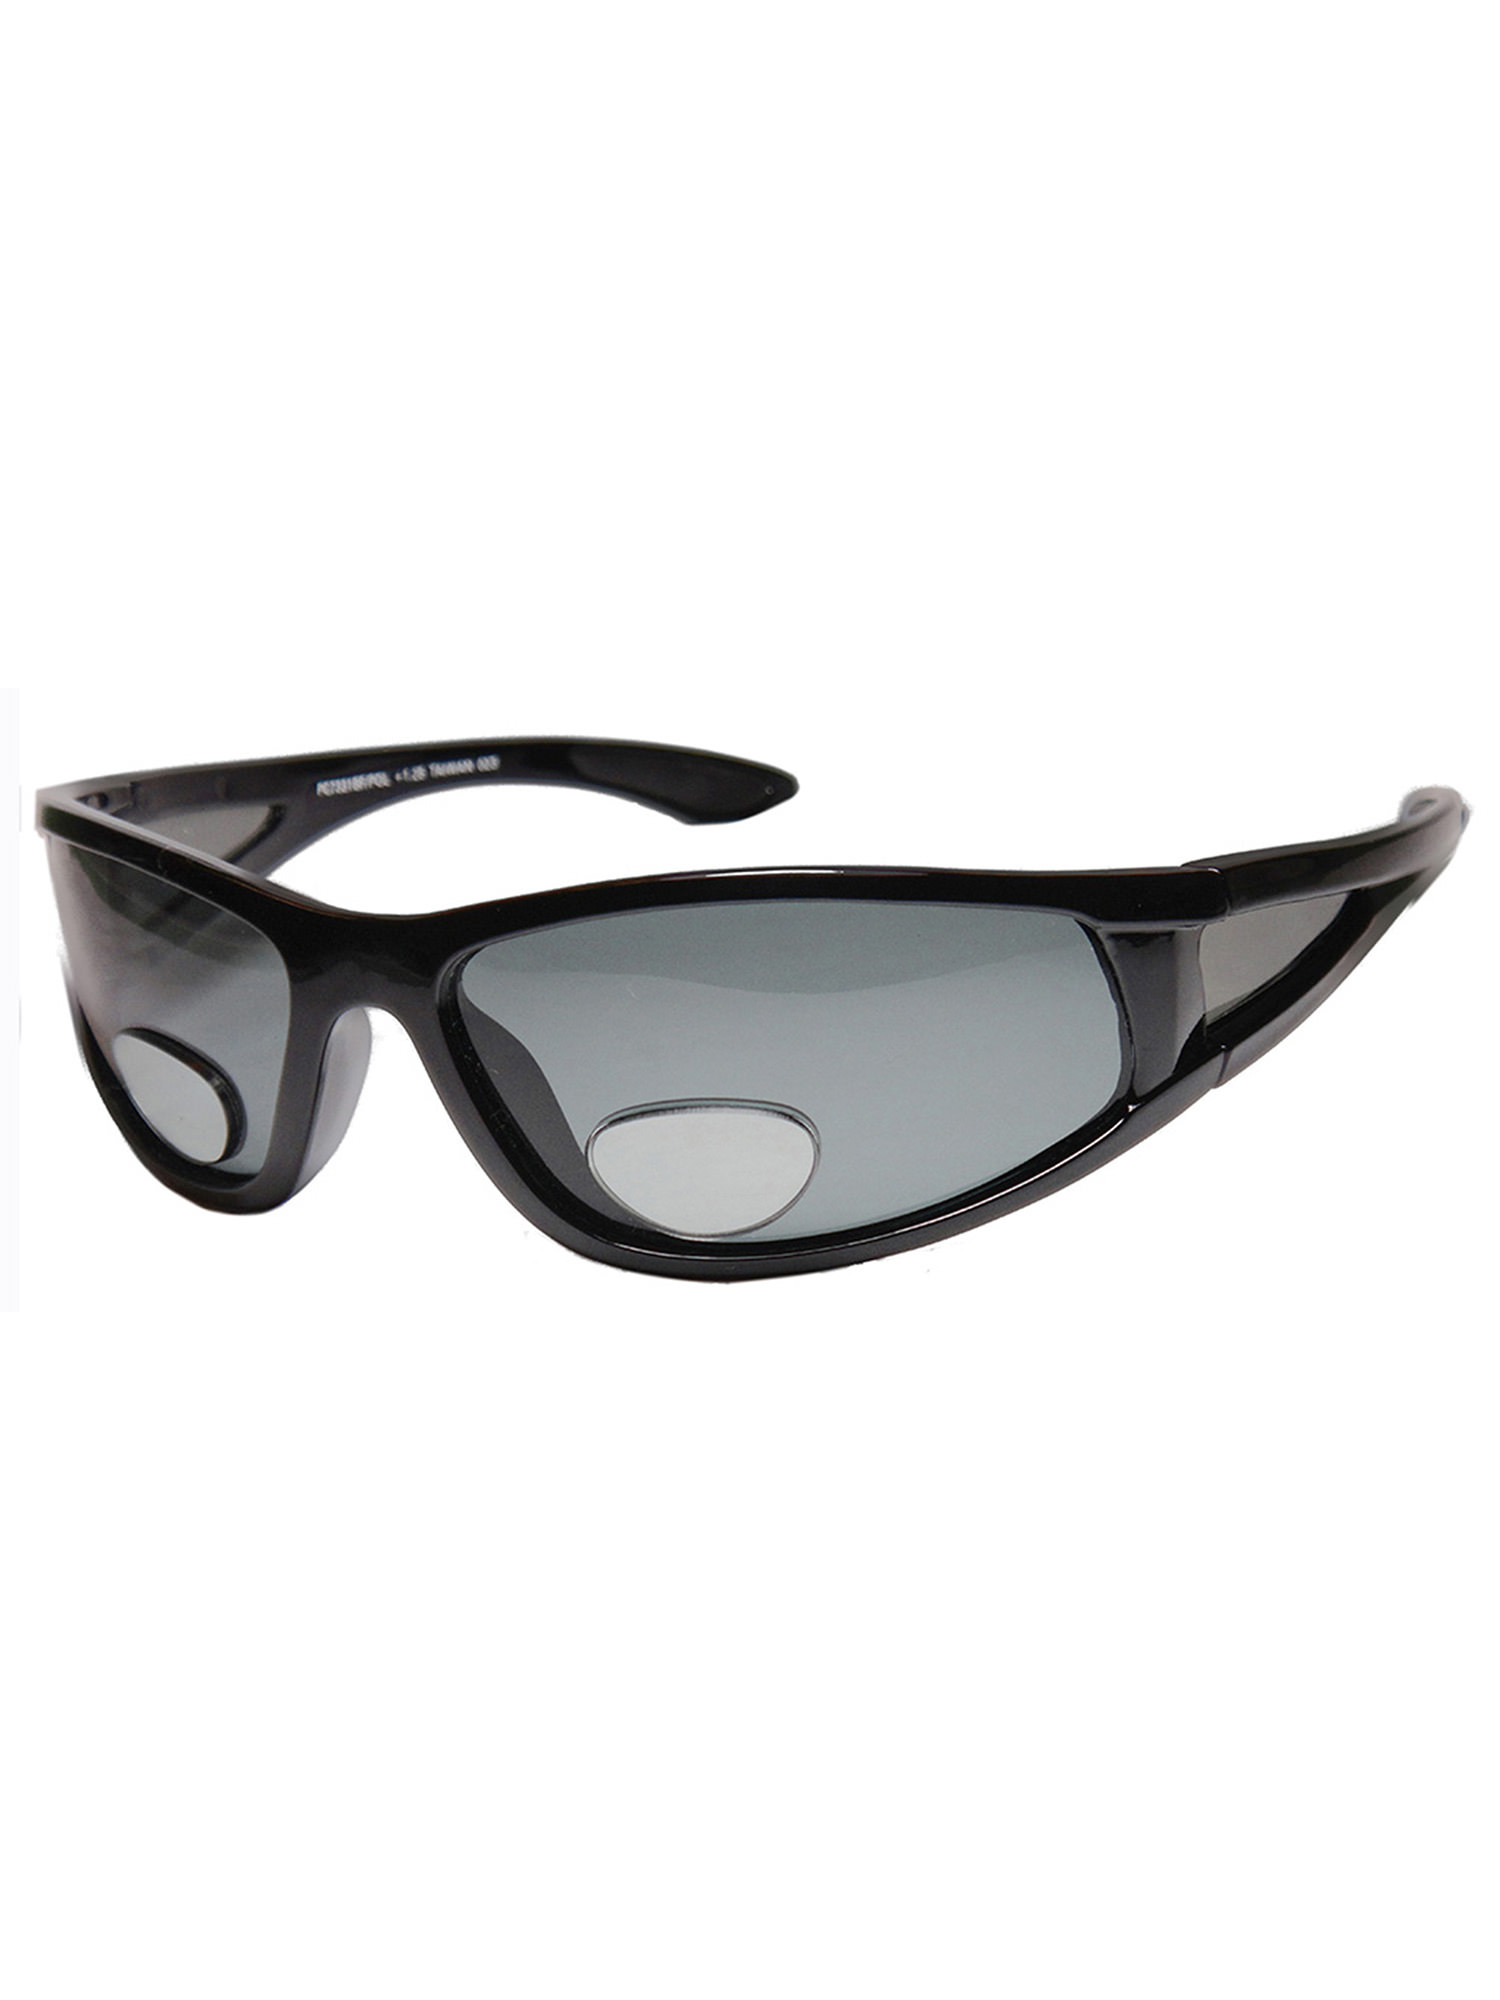 Glasslane Mens Sports Sunglasses Polarized Wrap Around Bifocal Lens Fly Fishing&nbsp;BLACK +2.00 - image 1 of 2